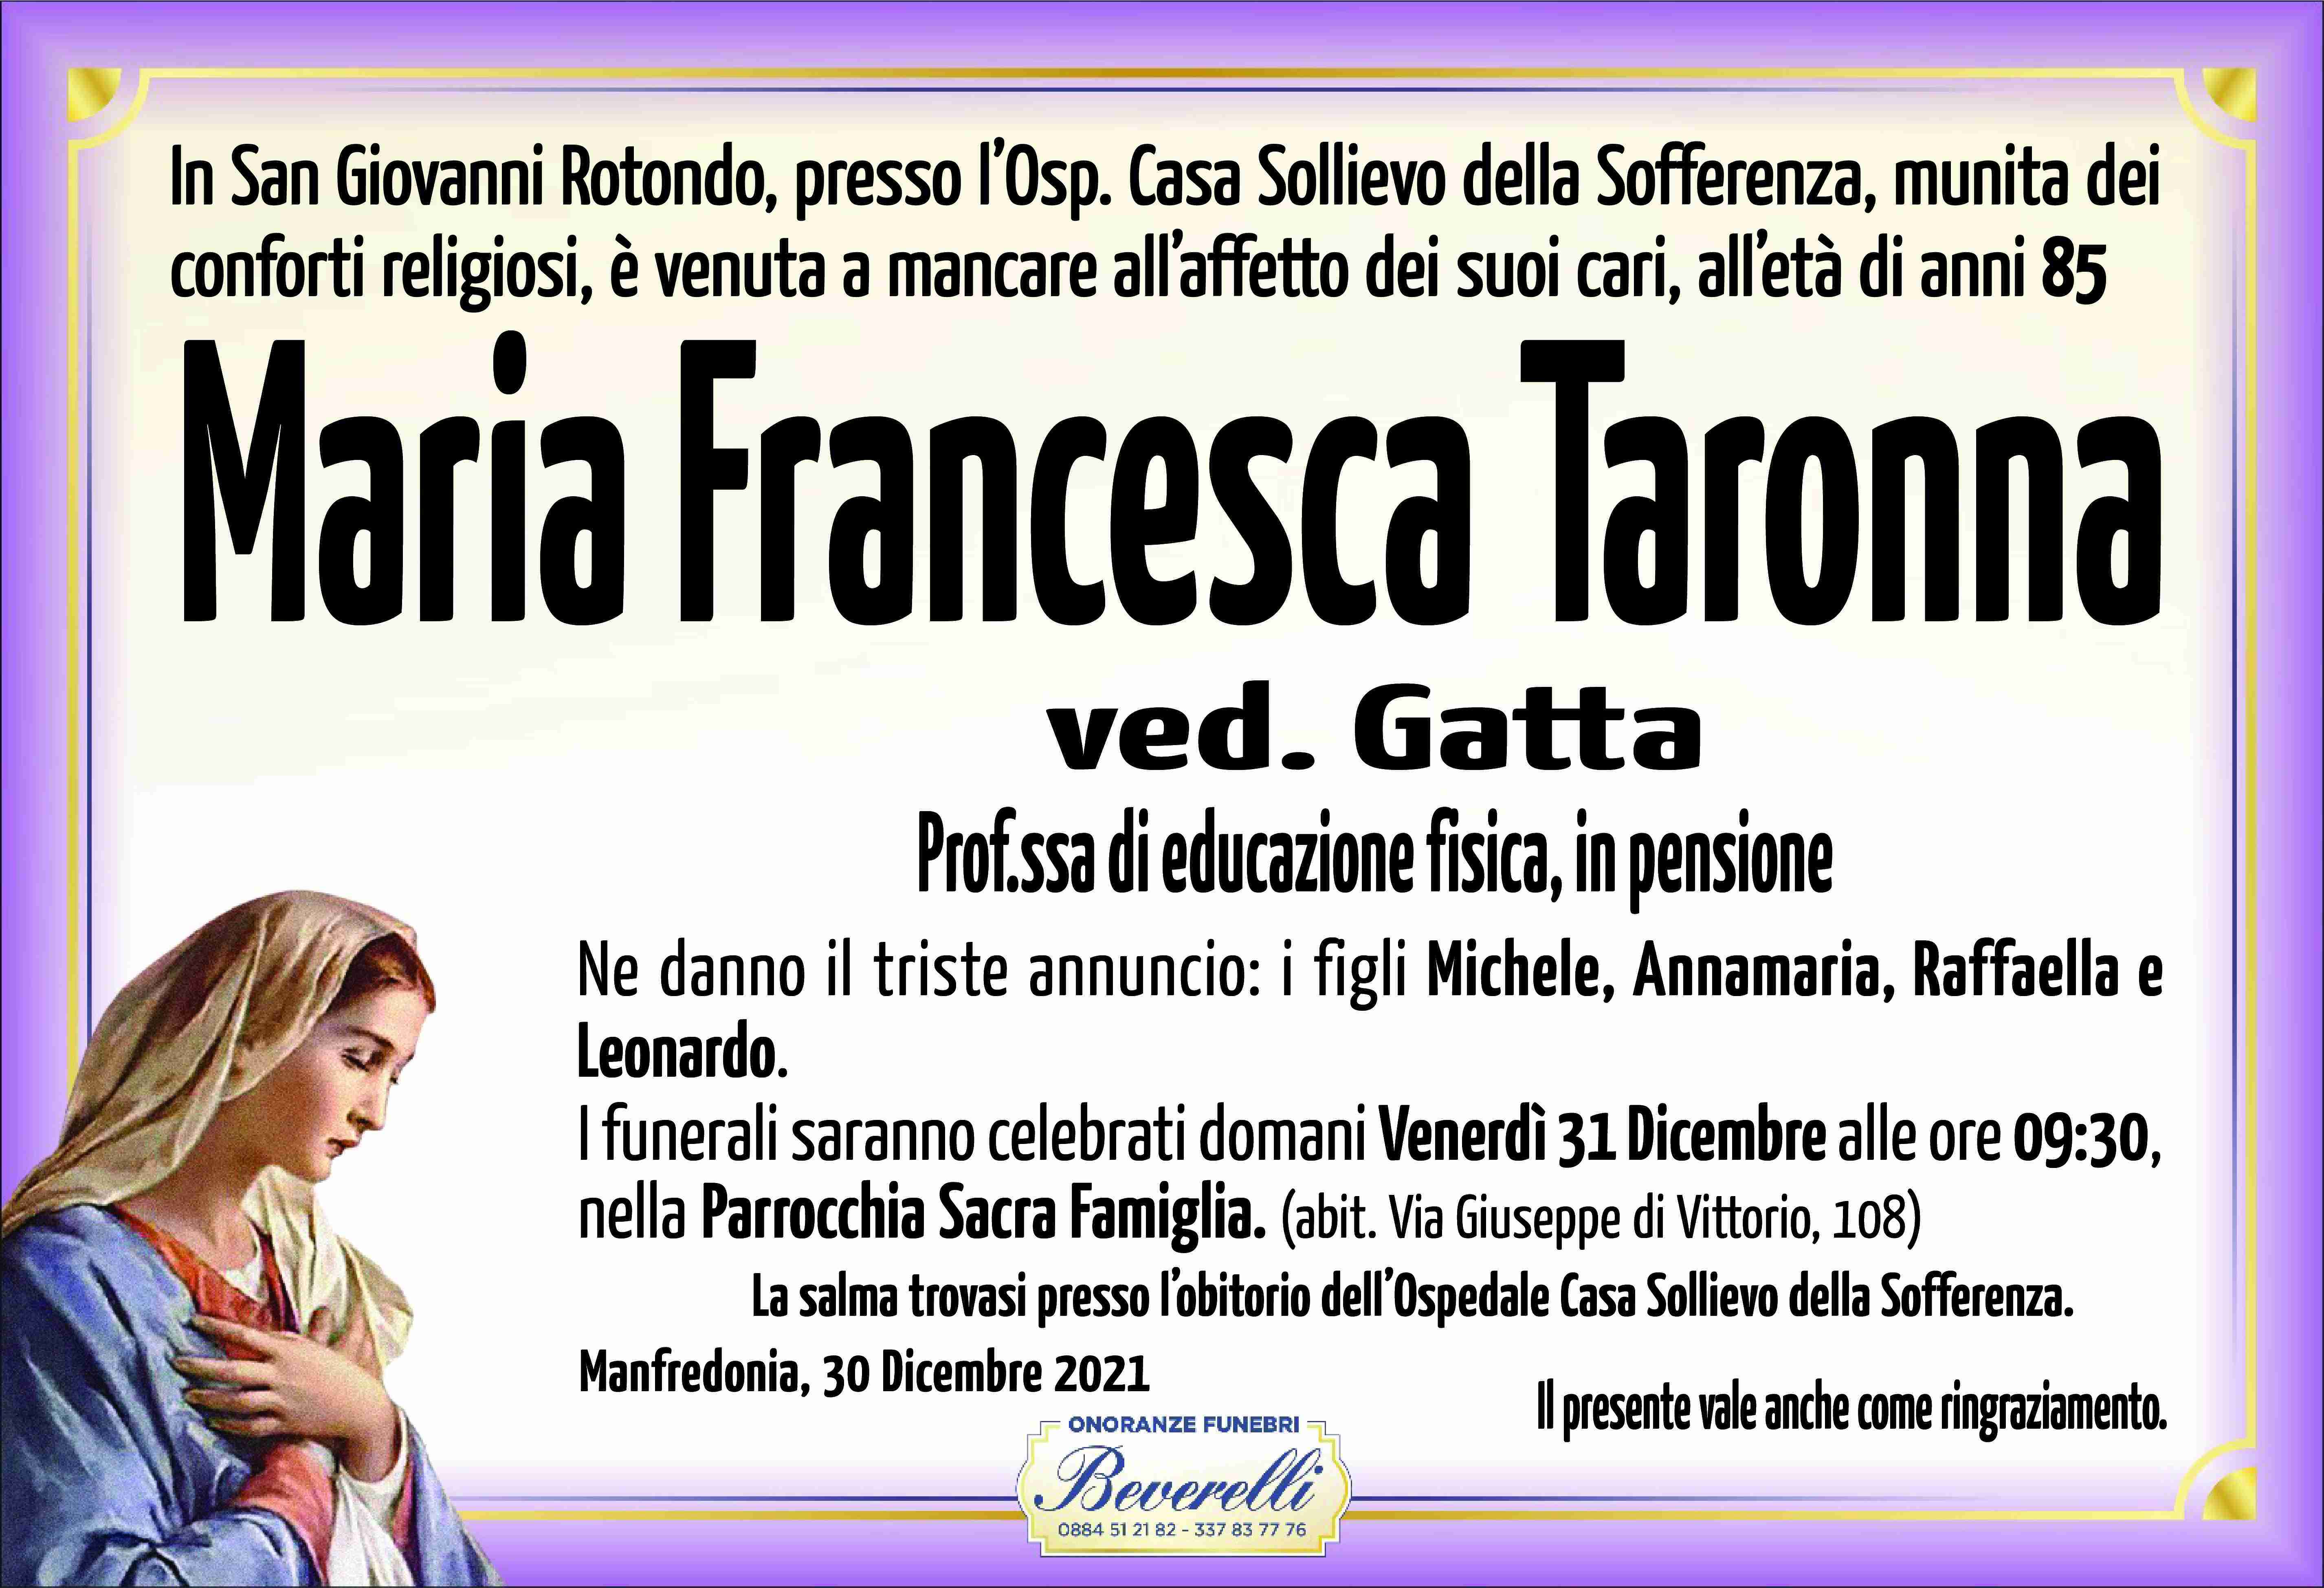 Maria Francesca Taronna